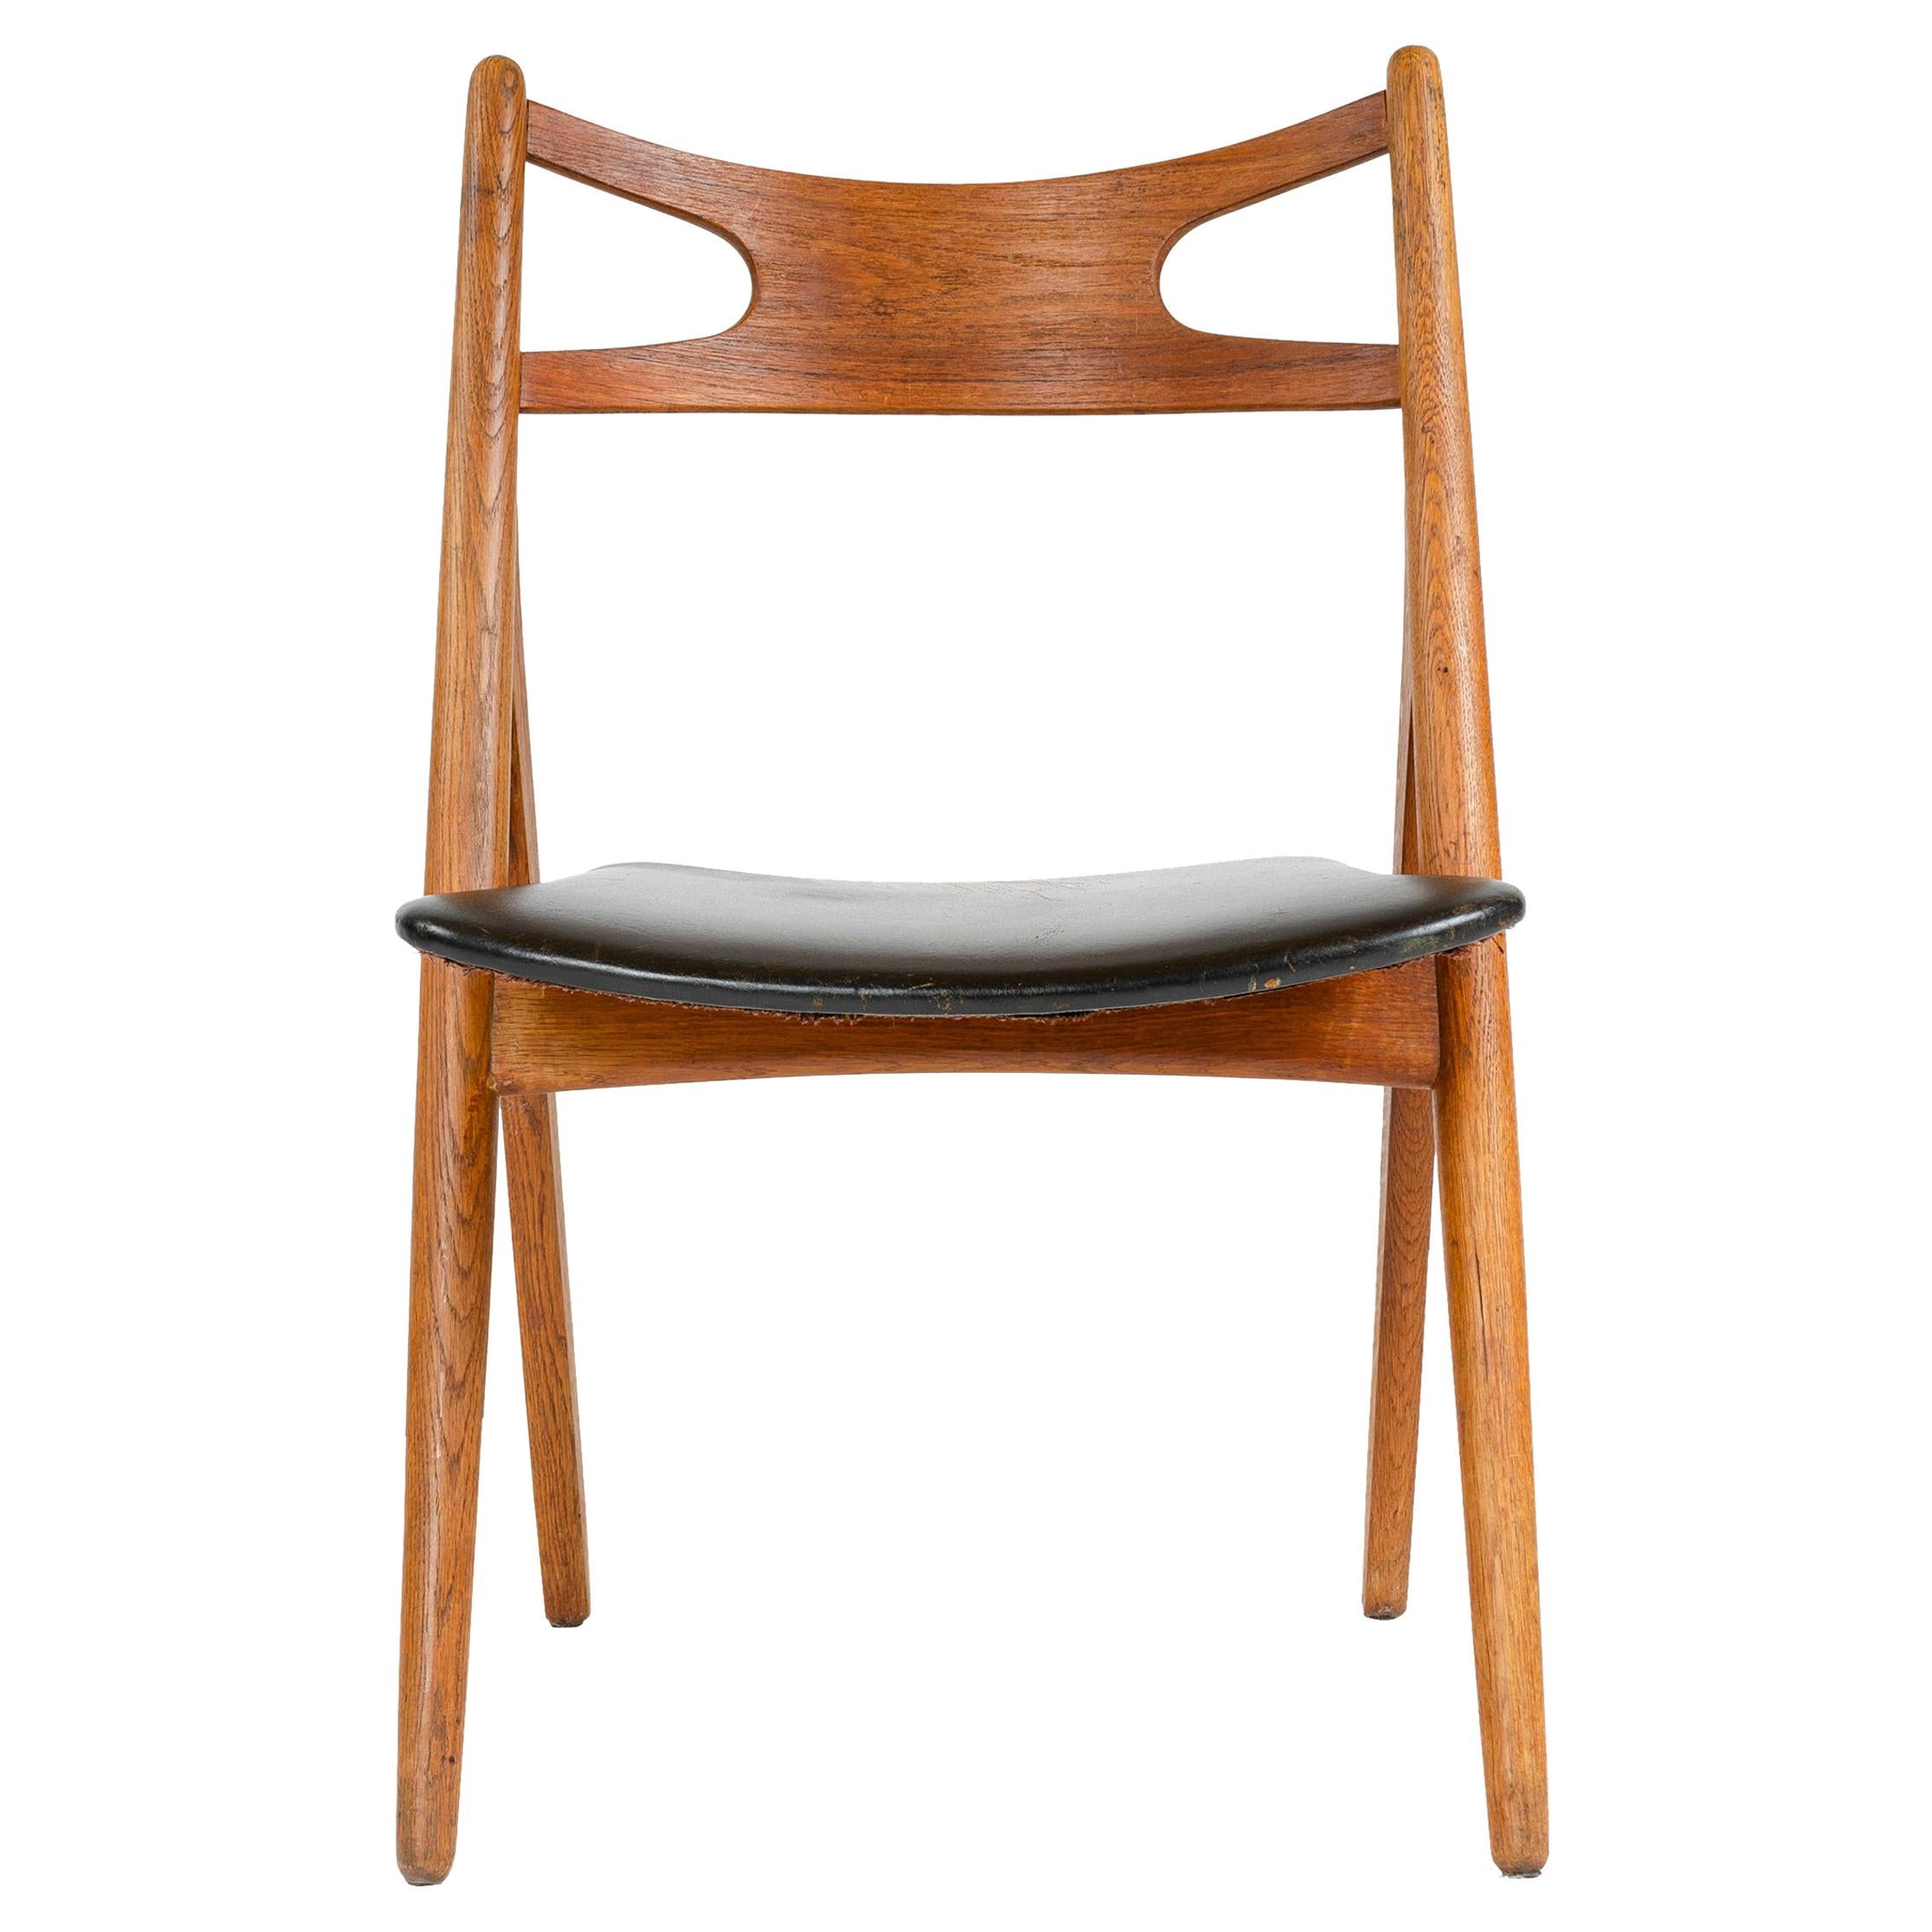 1950s Danish Sawbuck Chair by Hans J. Wegner